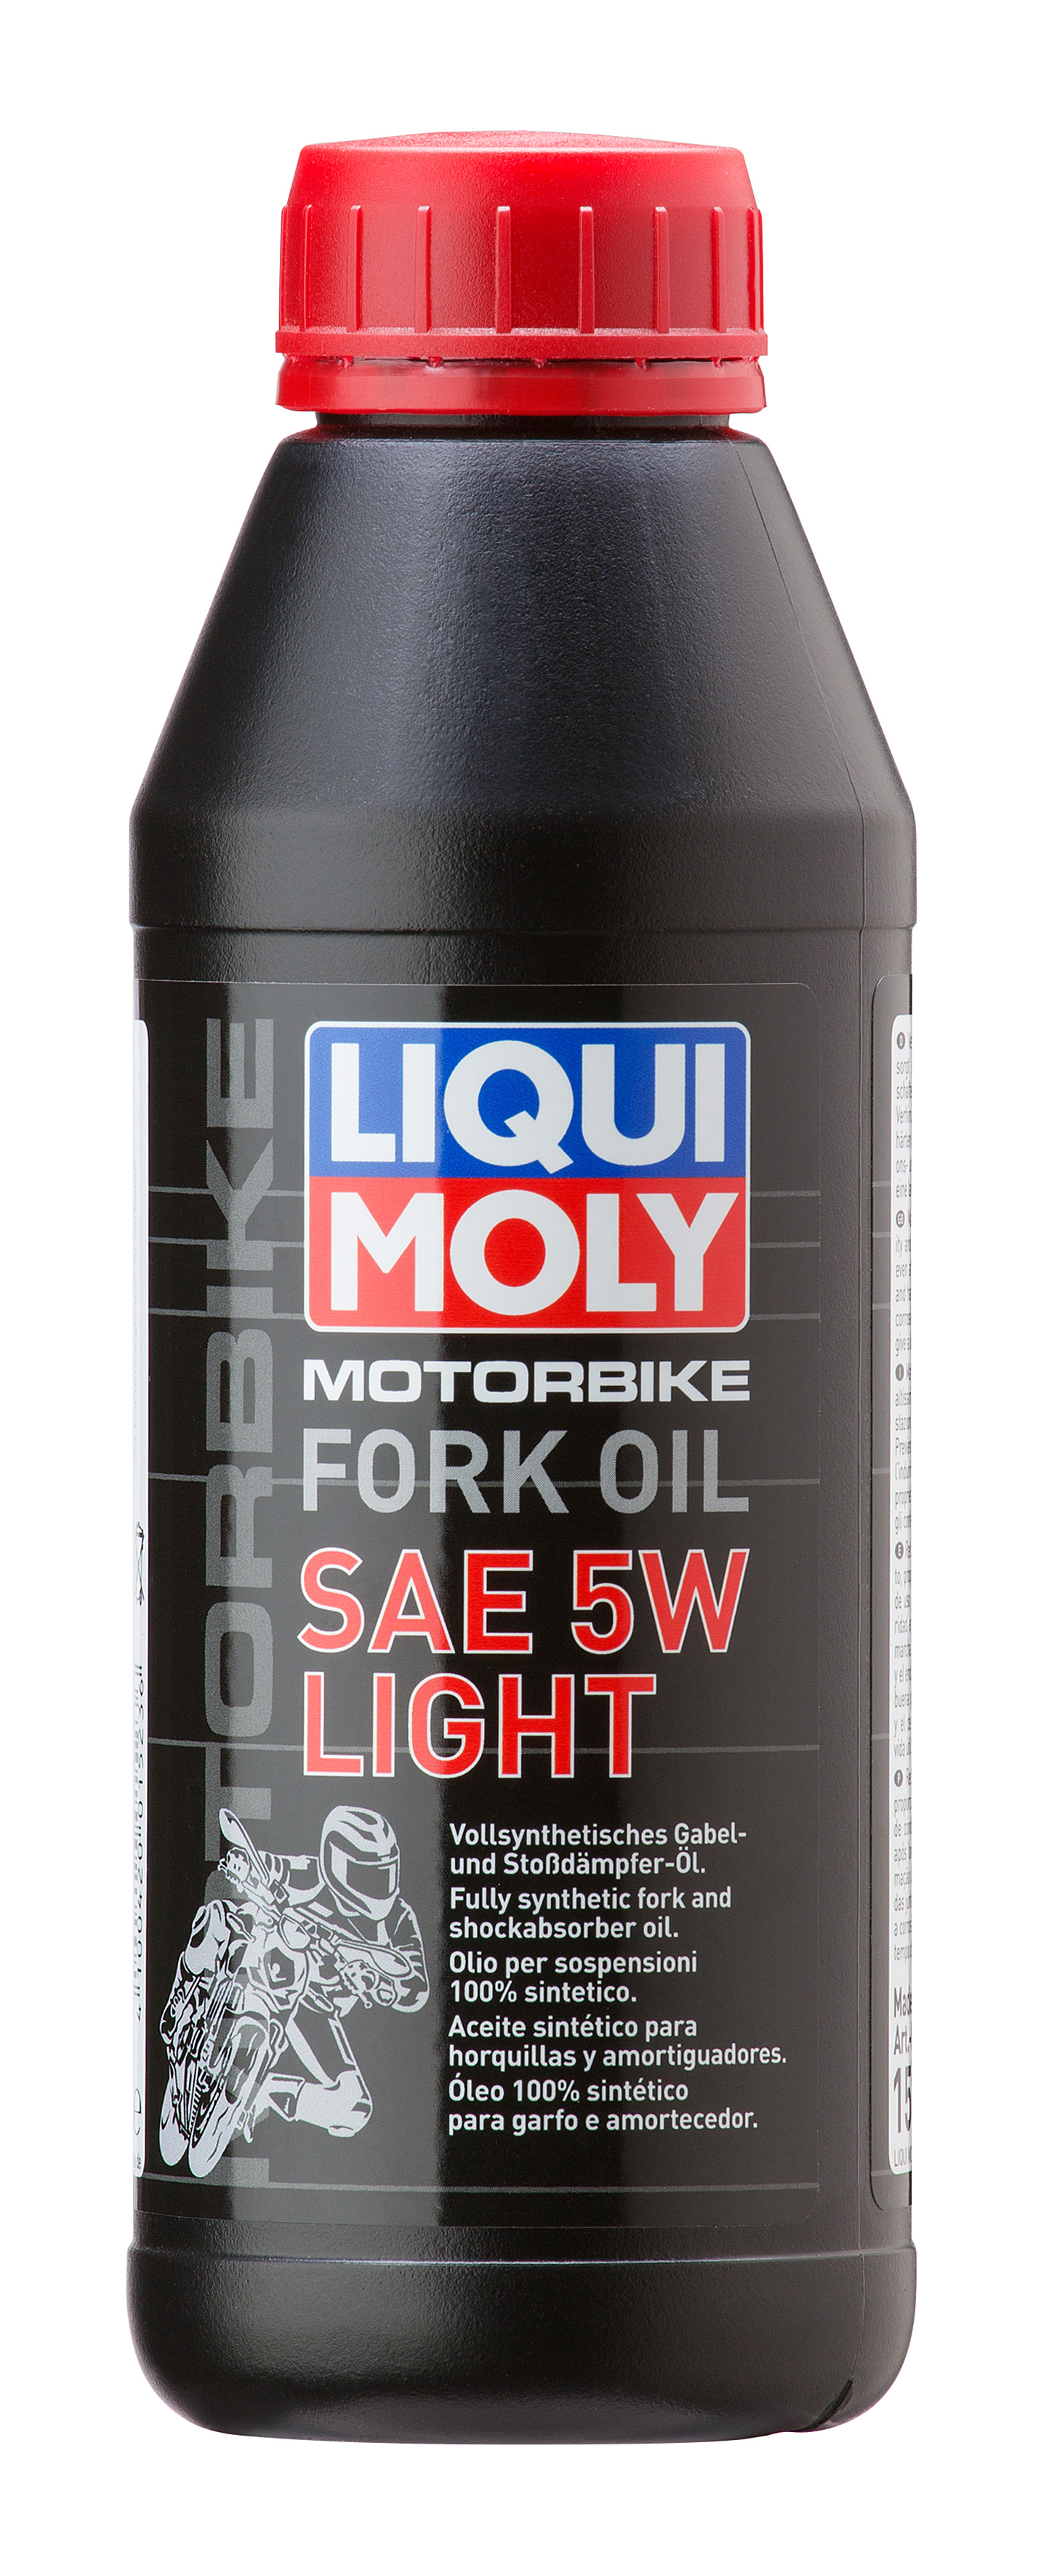  1523 LiquiMoly Синтетическое масло для вилок и амортизаторов Motorbike Fork Oil Light 5W 0,5л 